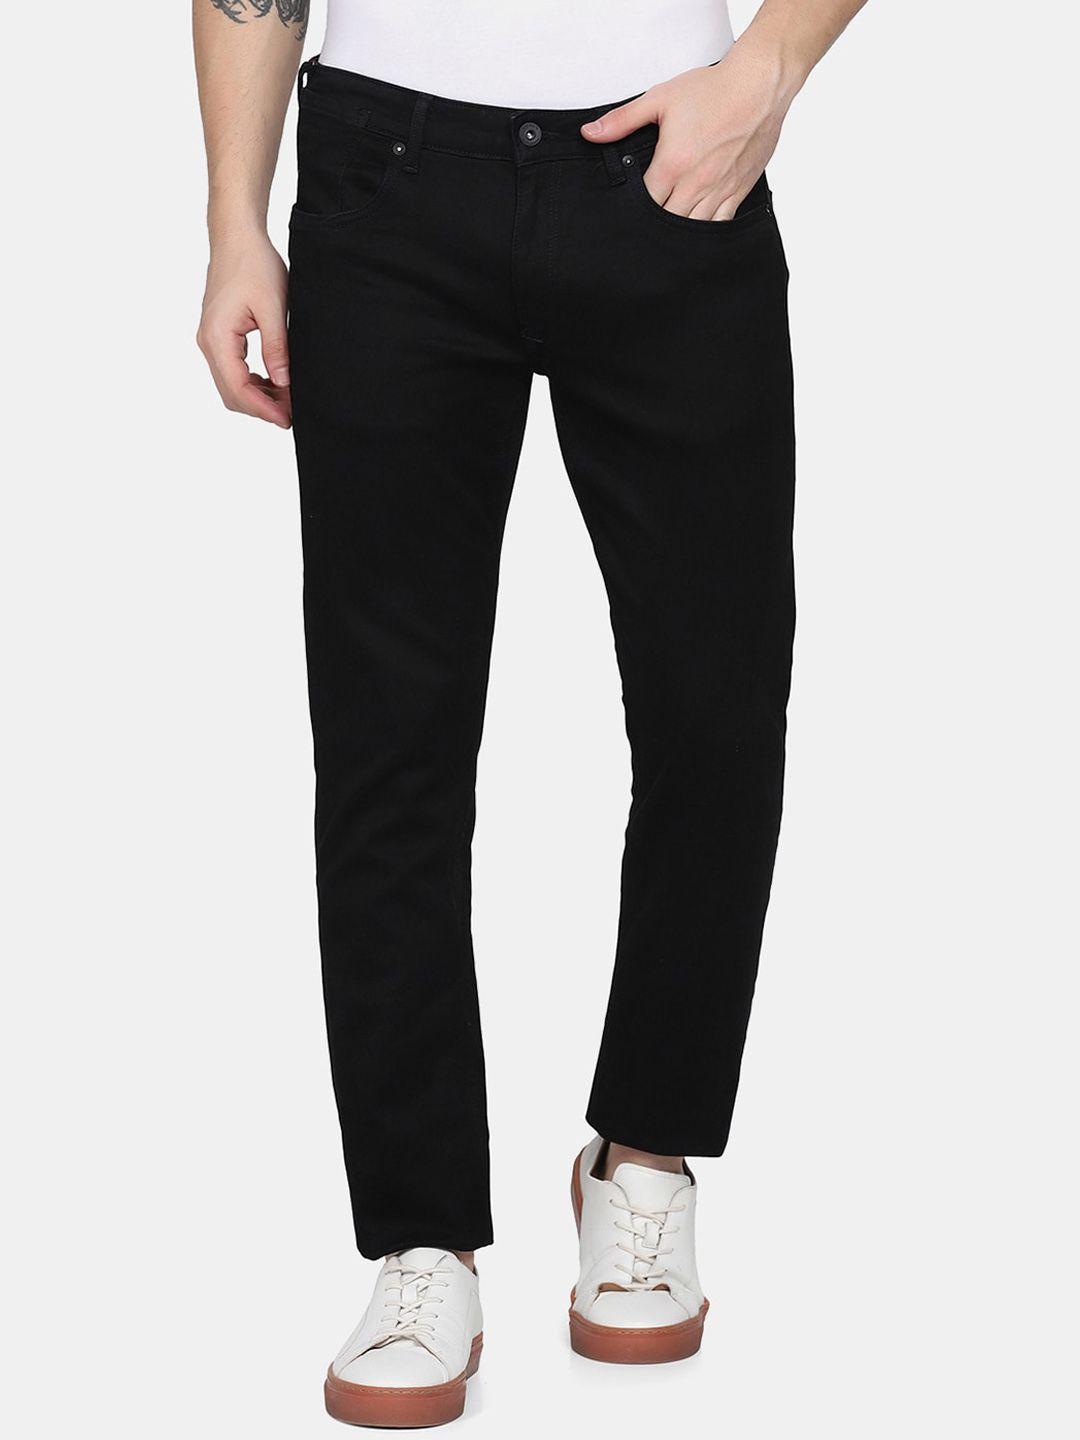 blackberrys-men-black-slim-fit-stretchable-jeans